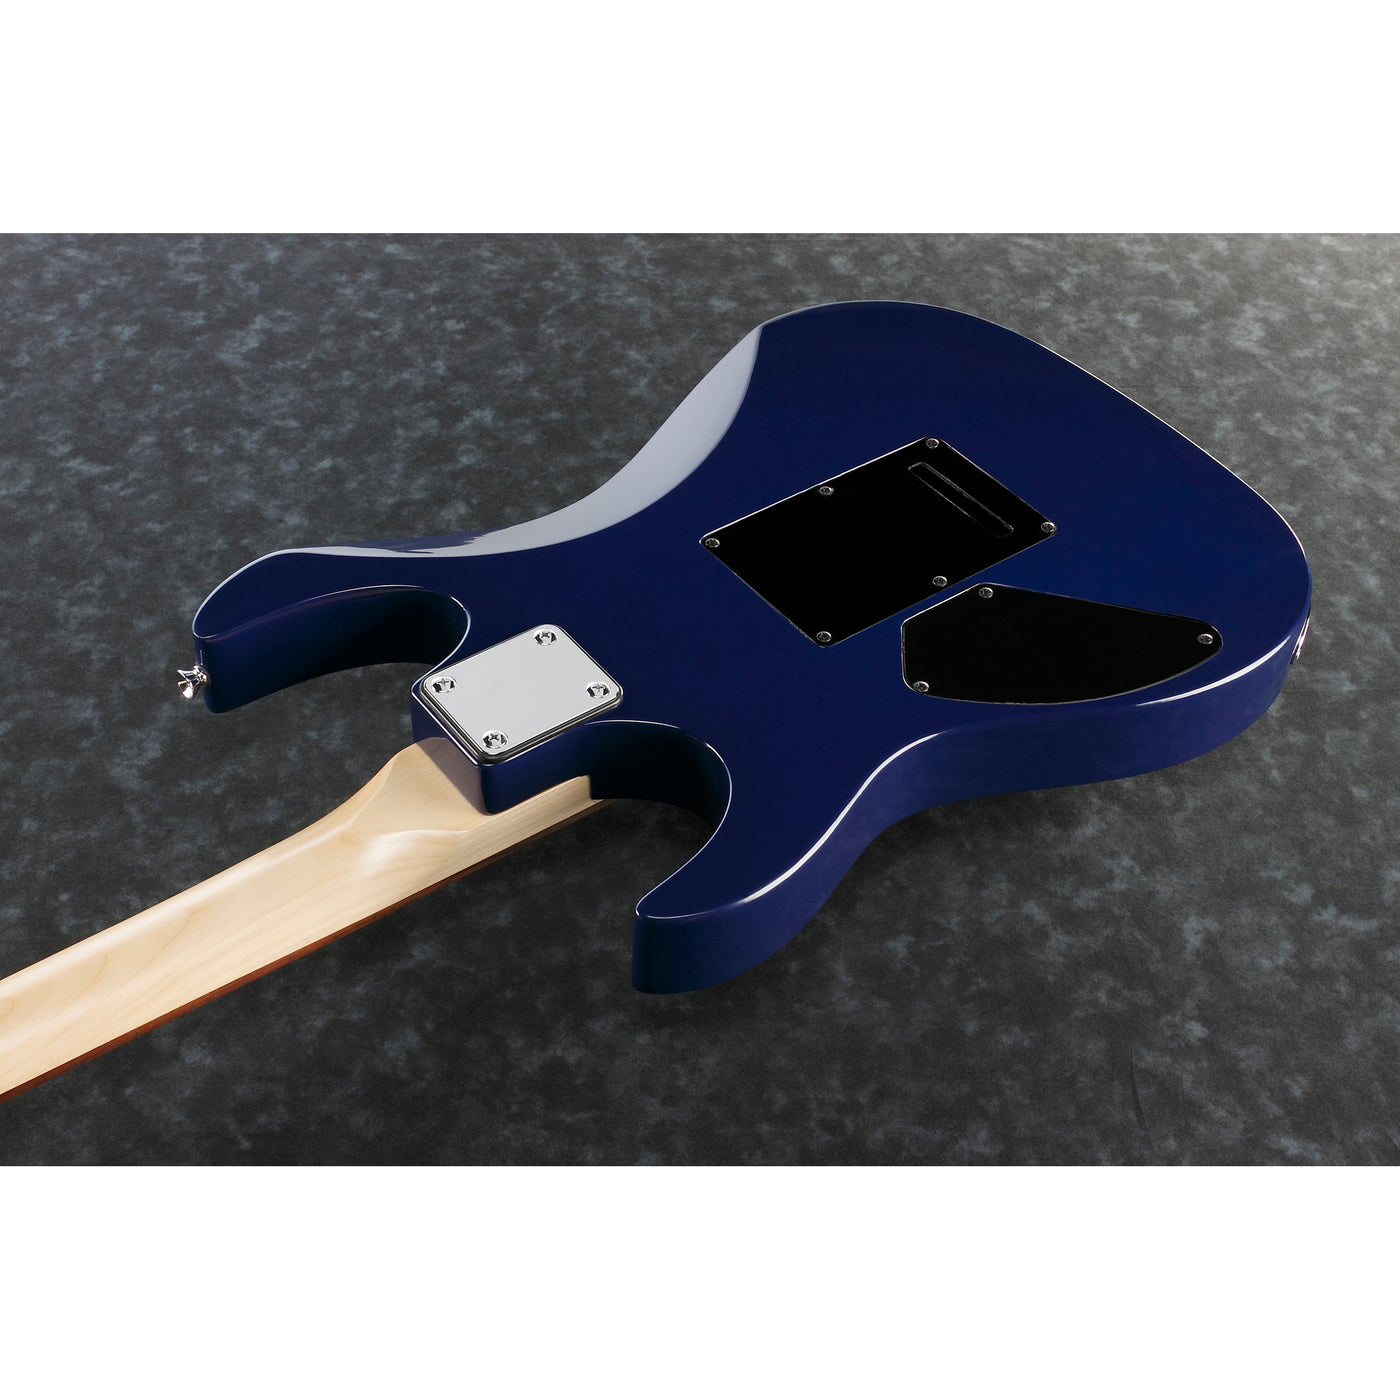 Ibanez Gio GRX70QA Electric Guitar - Transparent Blue Burst